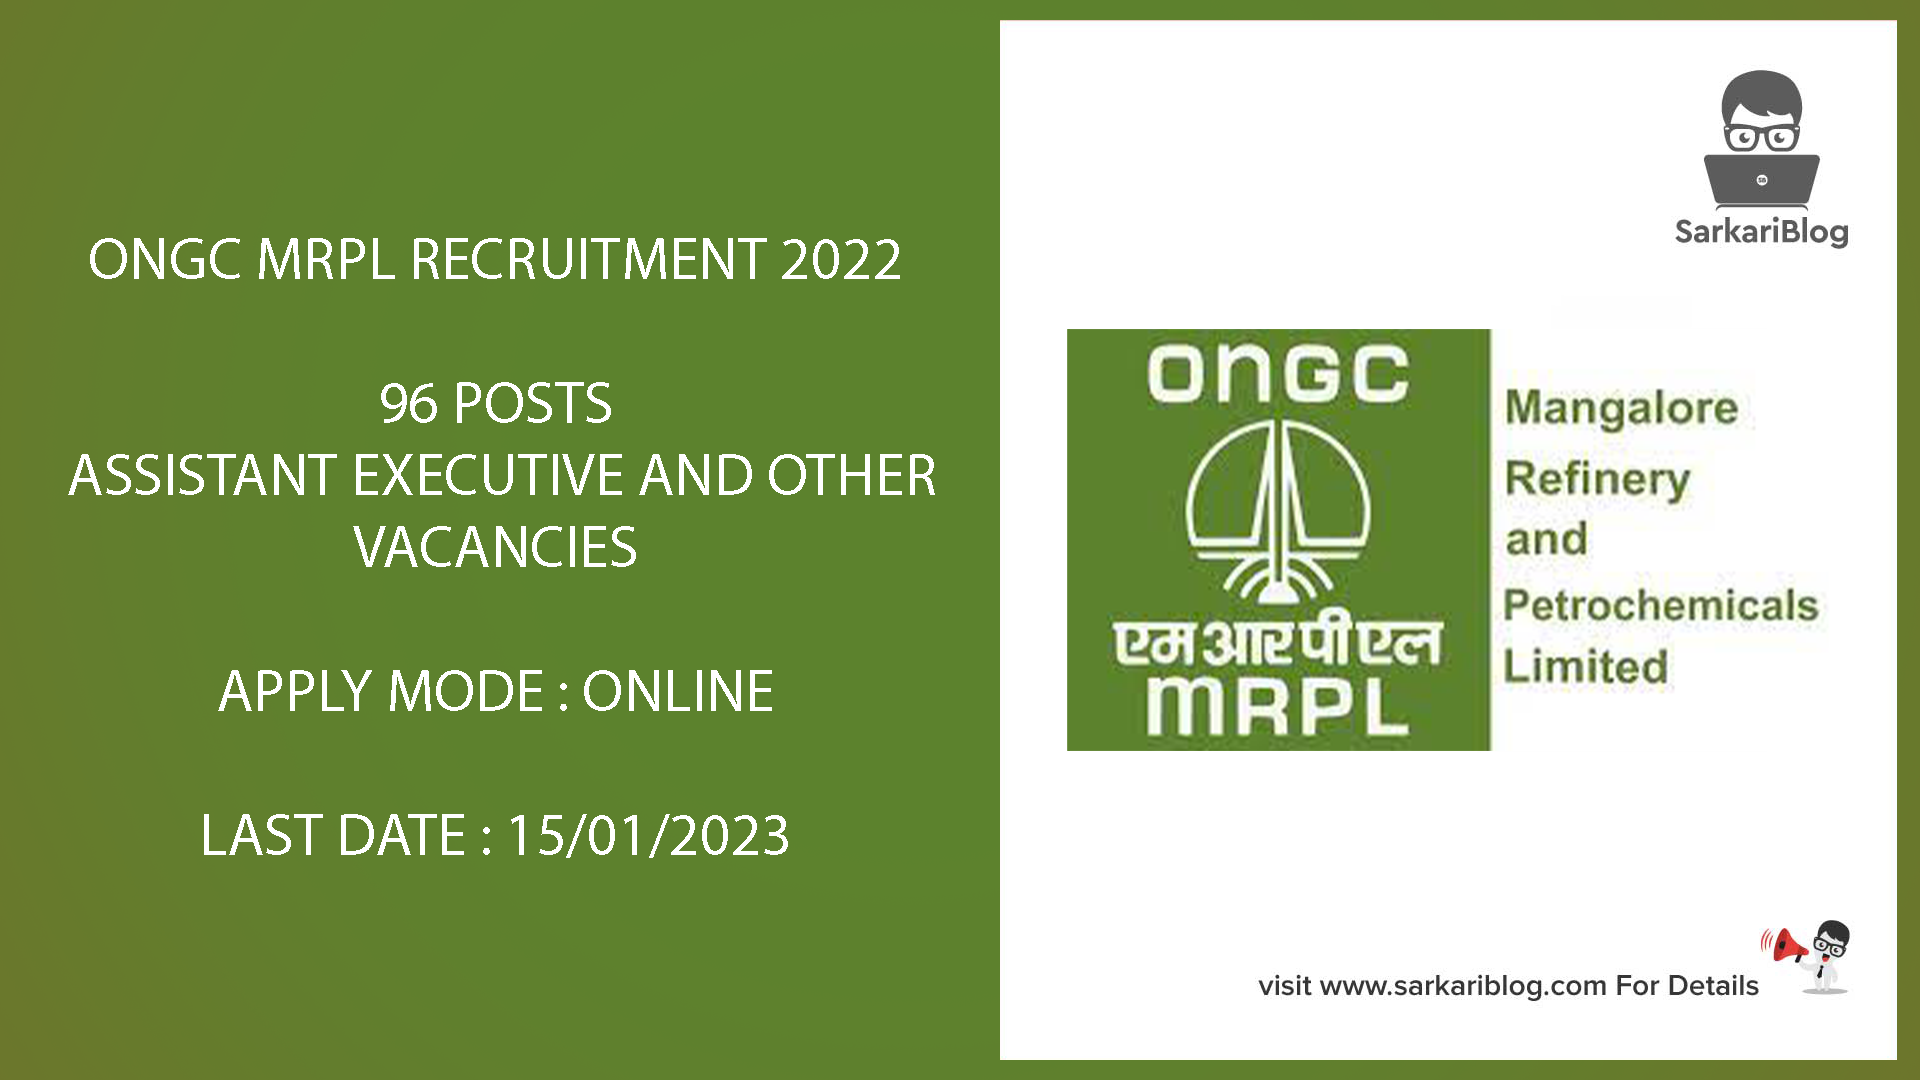 ONGC MRPL RECRUITMENT 2022